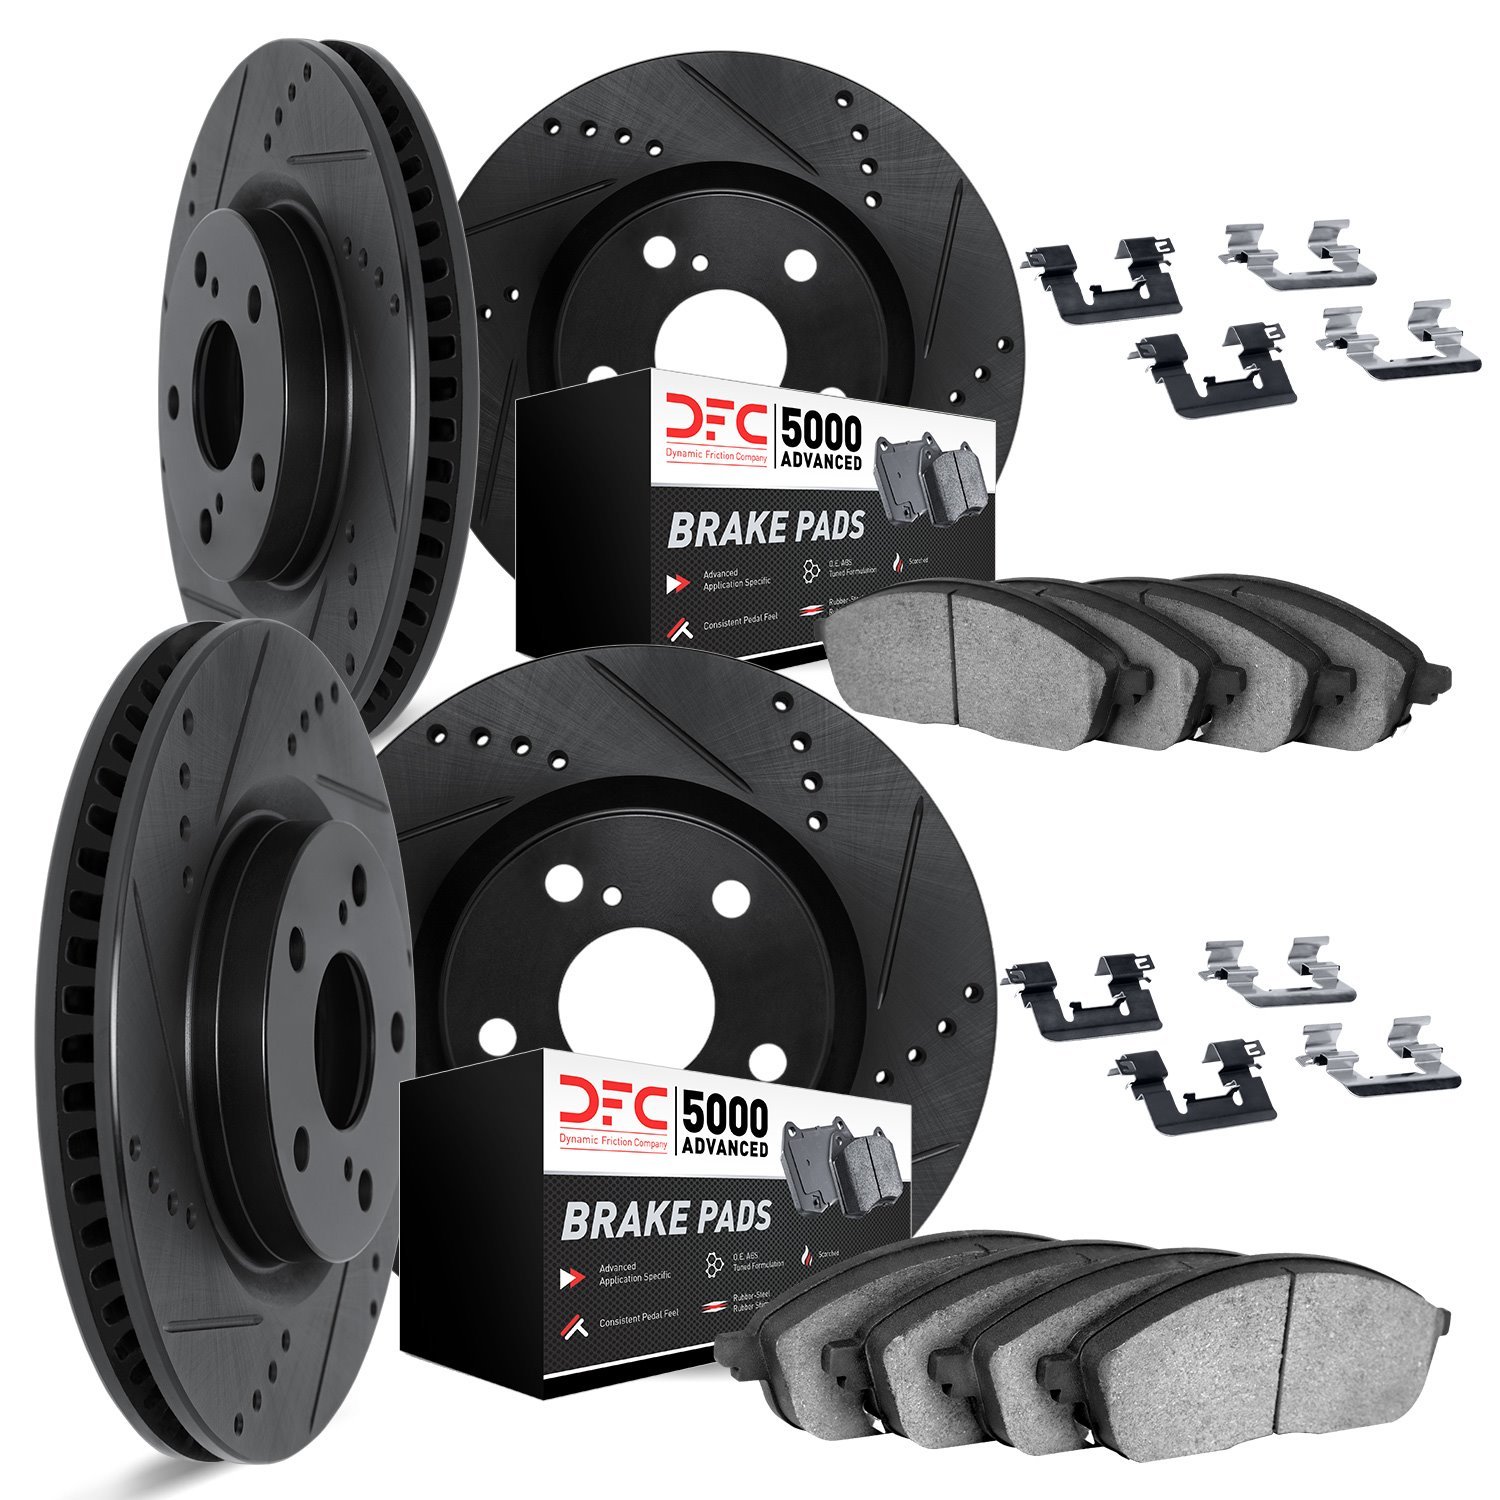 8514-03142 Drilled/Slotted Brake Rotors w/5000 Advanced Brake Pads Kit & Hardware [Black], Fits Select Kia/Hyundai/Genesis, Posi